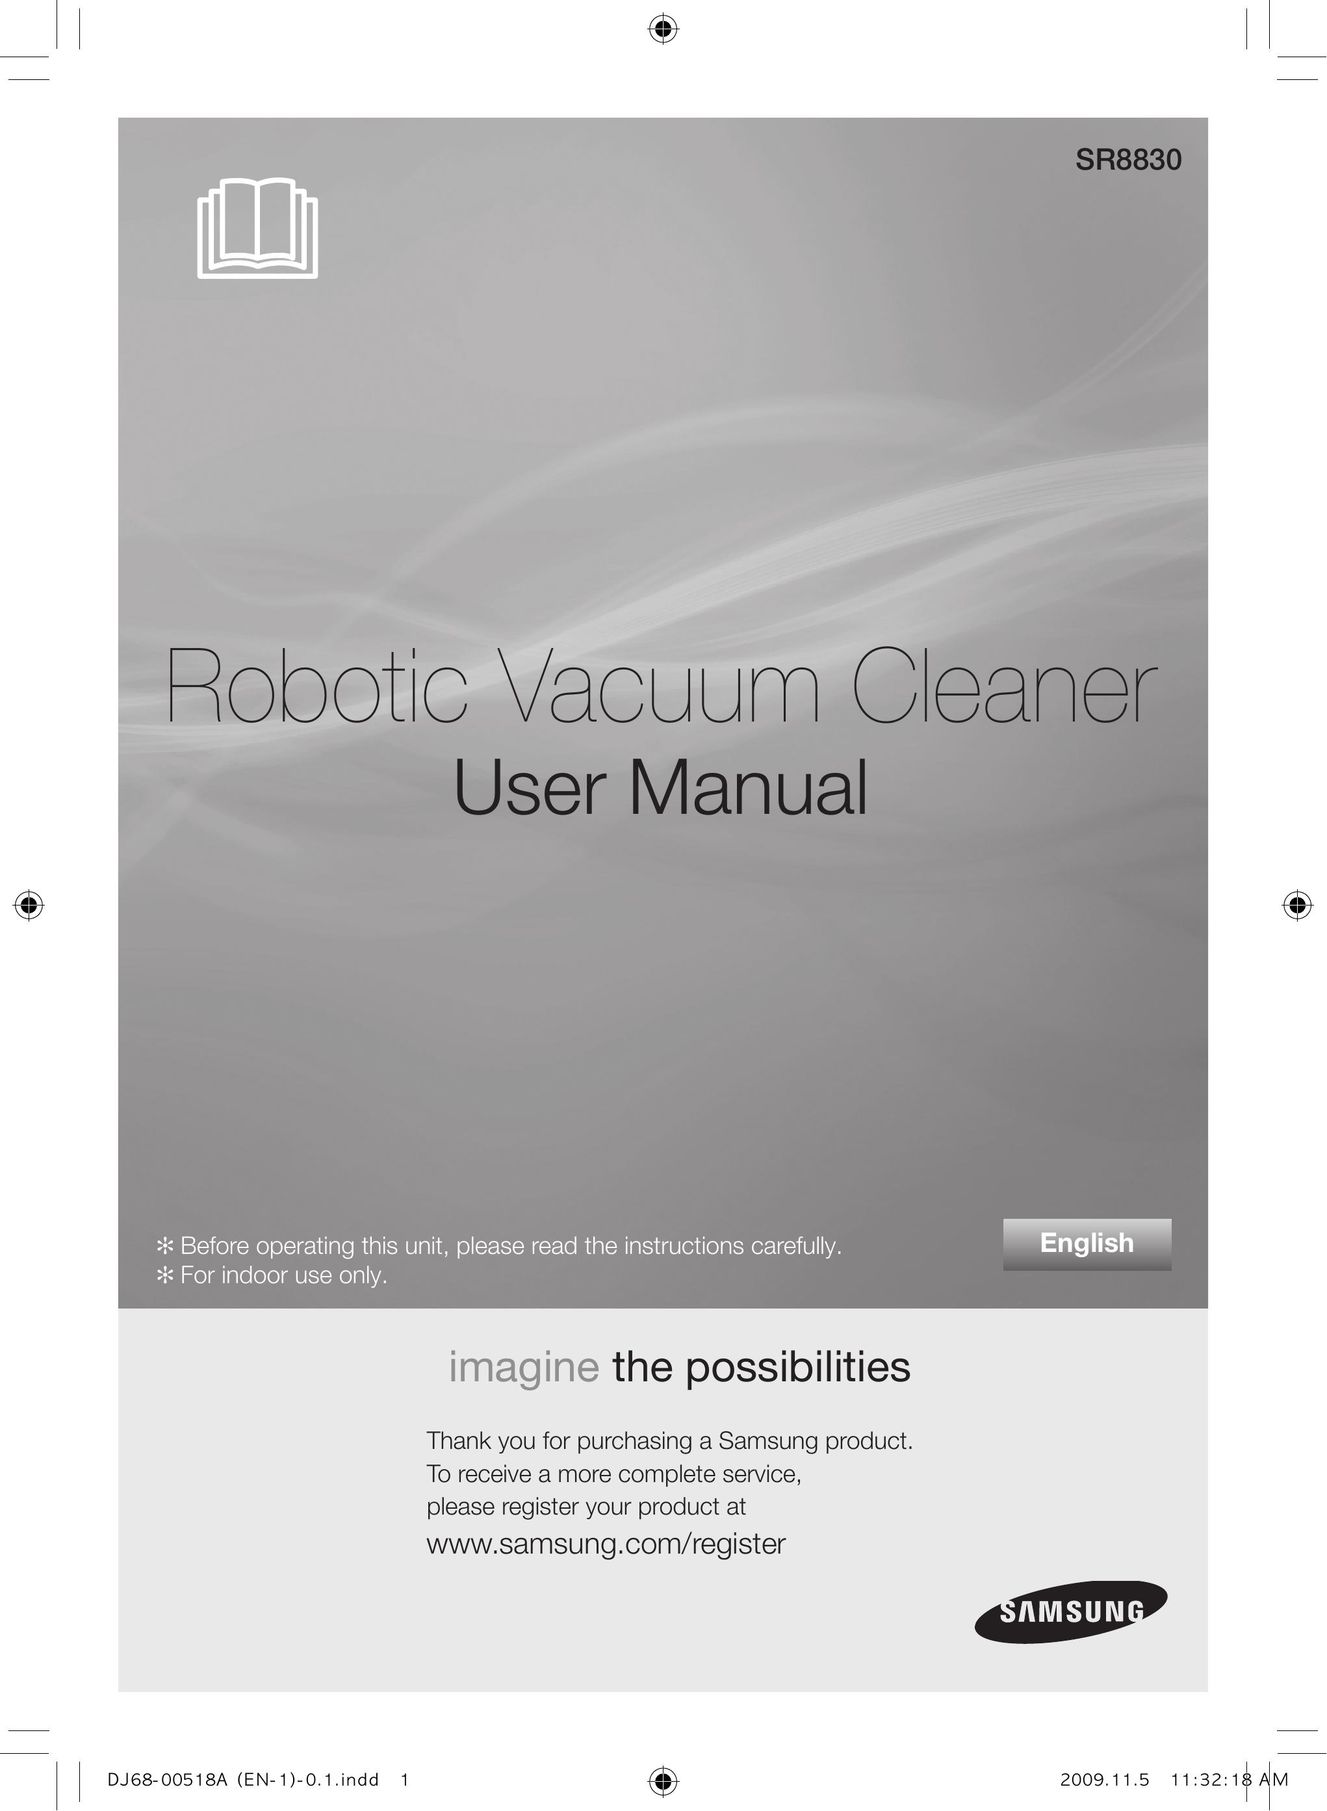 Samsung VCR8830T1R Vacuum Cleaner User Manual